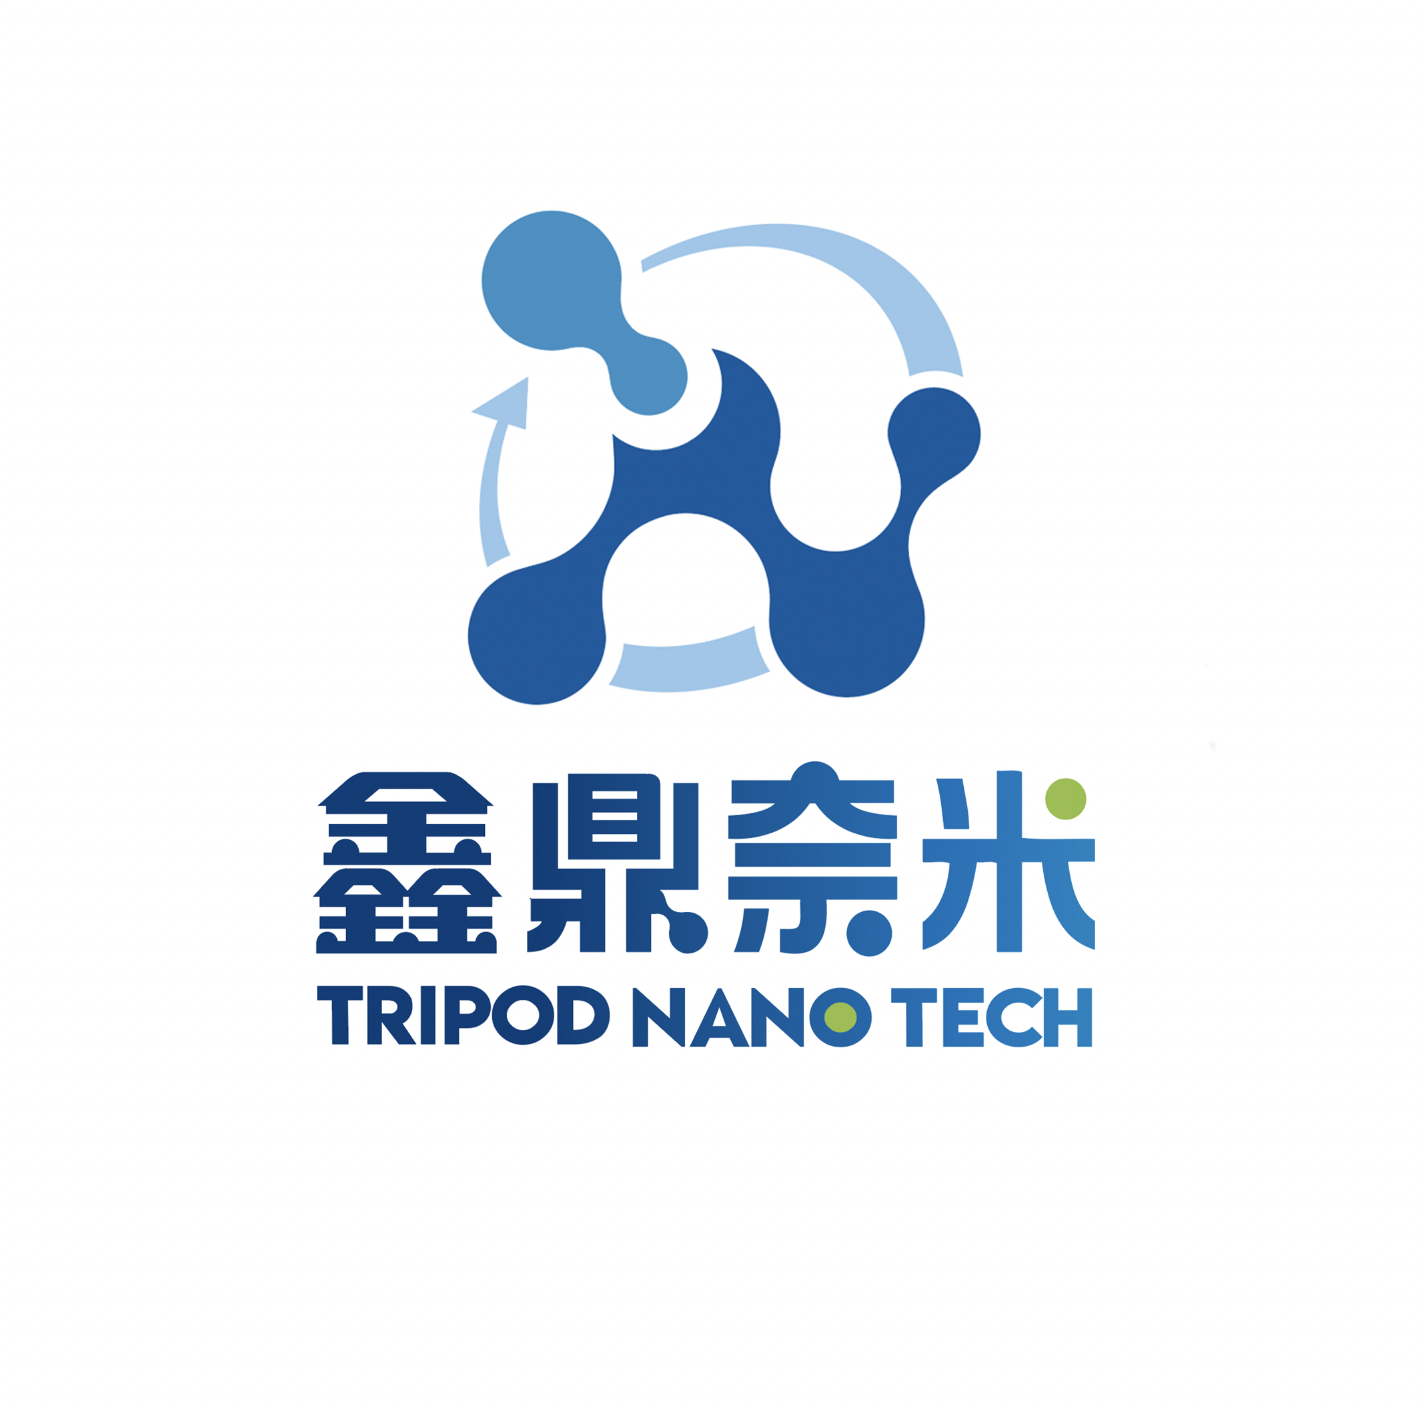 Tripod Nano Technology Corporation